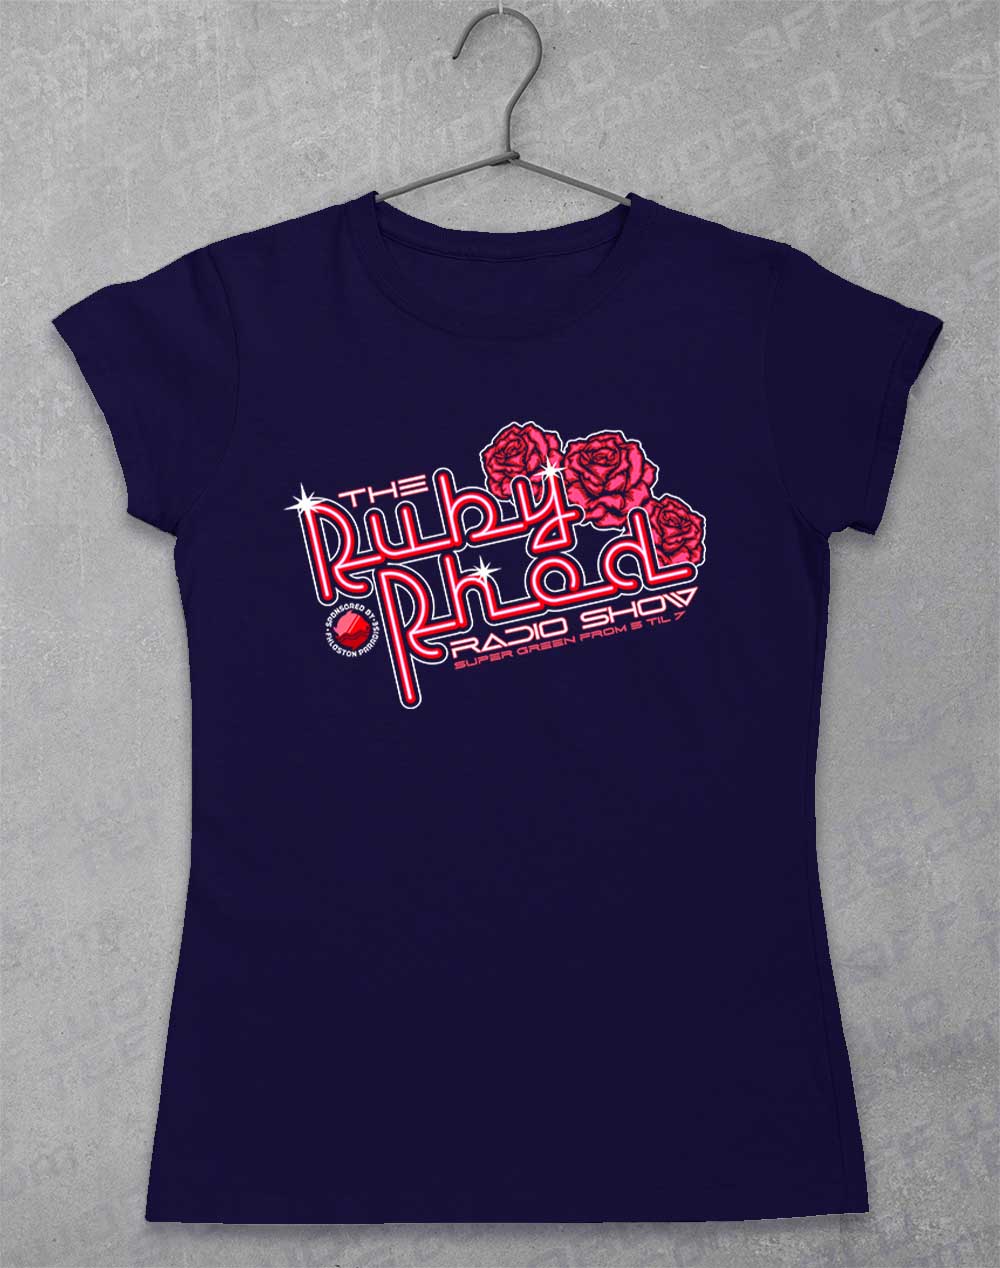 Navy - Ruby Rhod Radio Show Women's T-Shirt